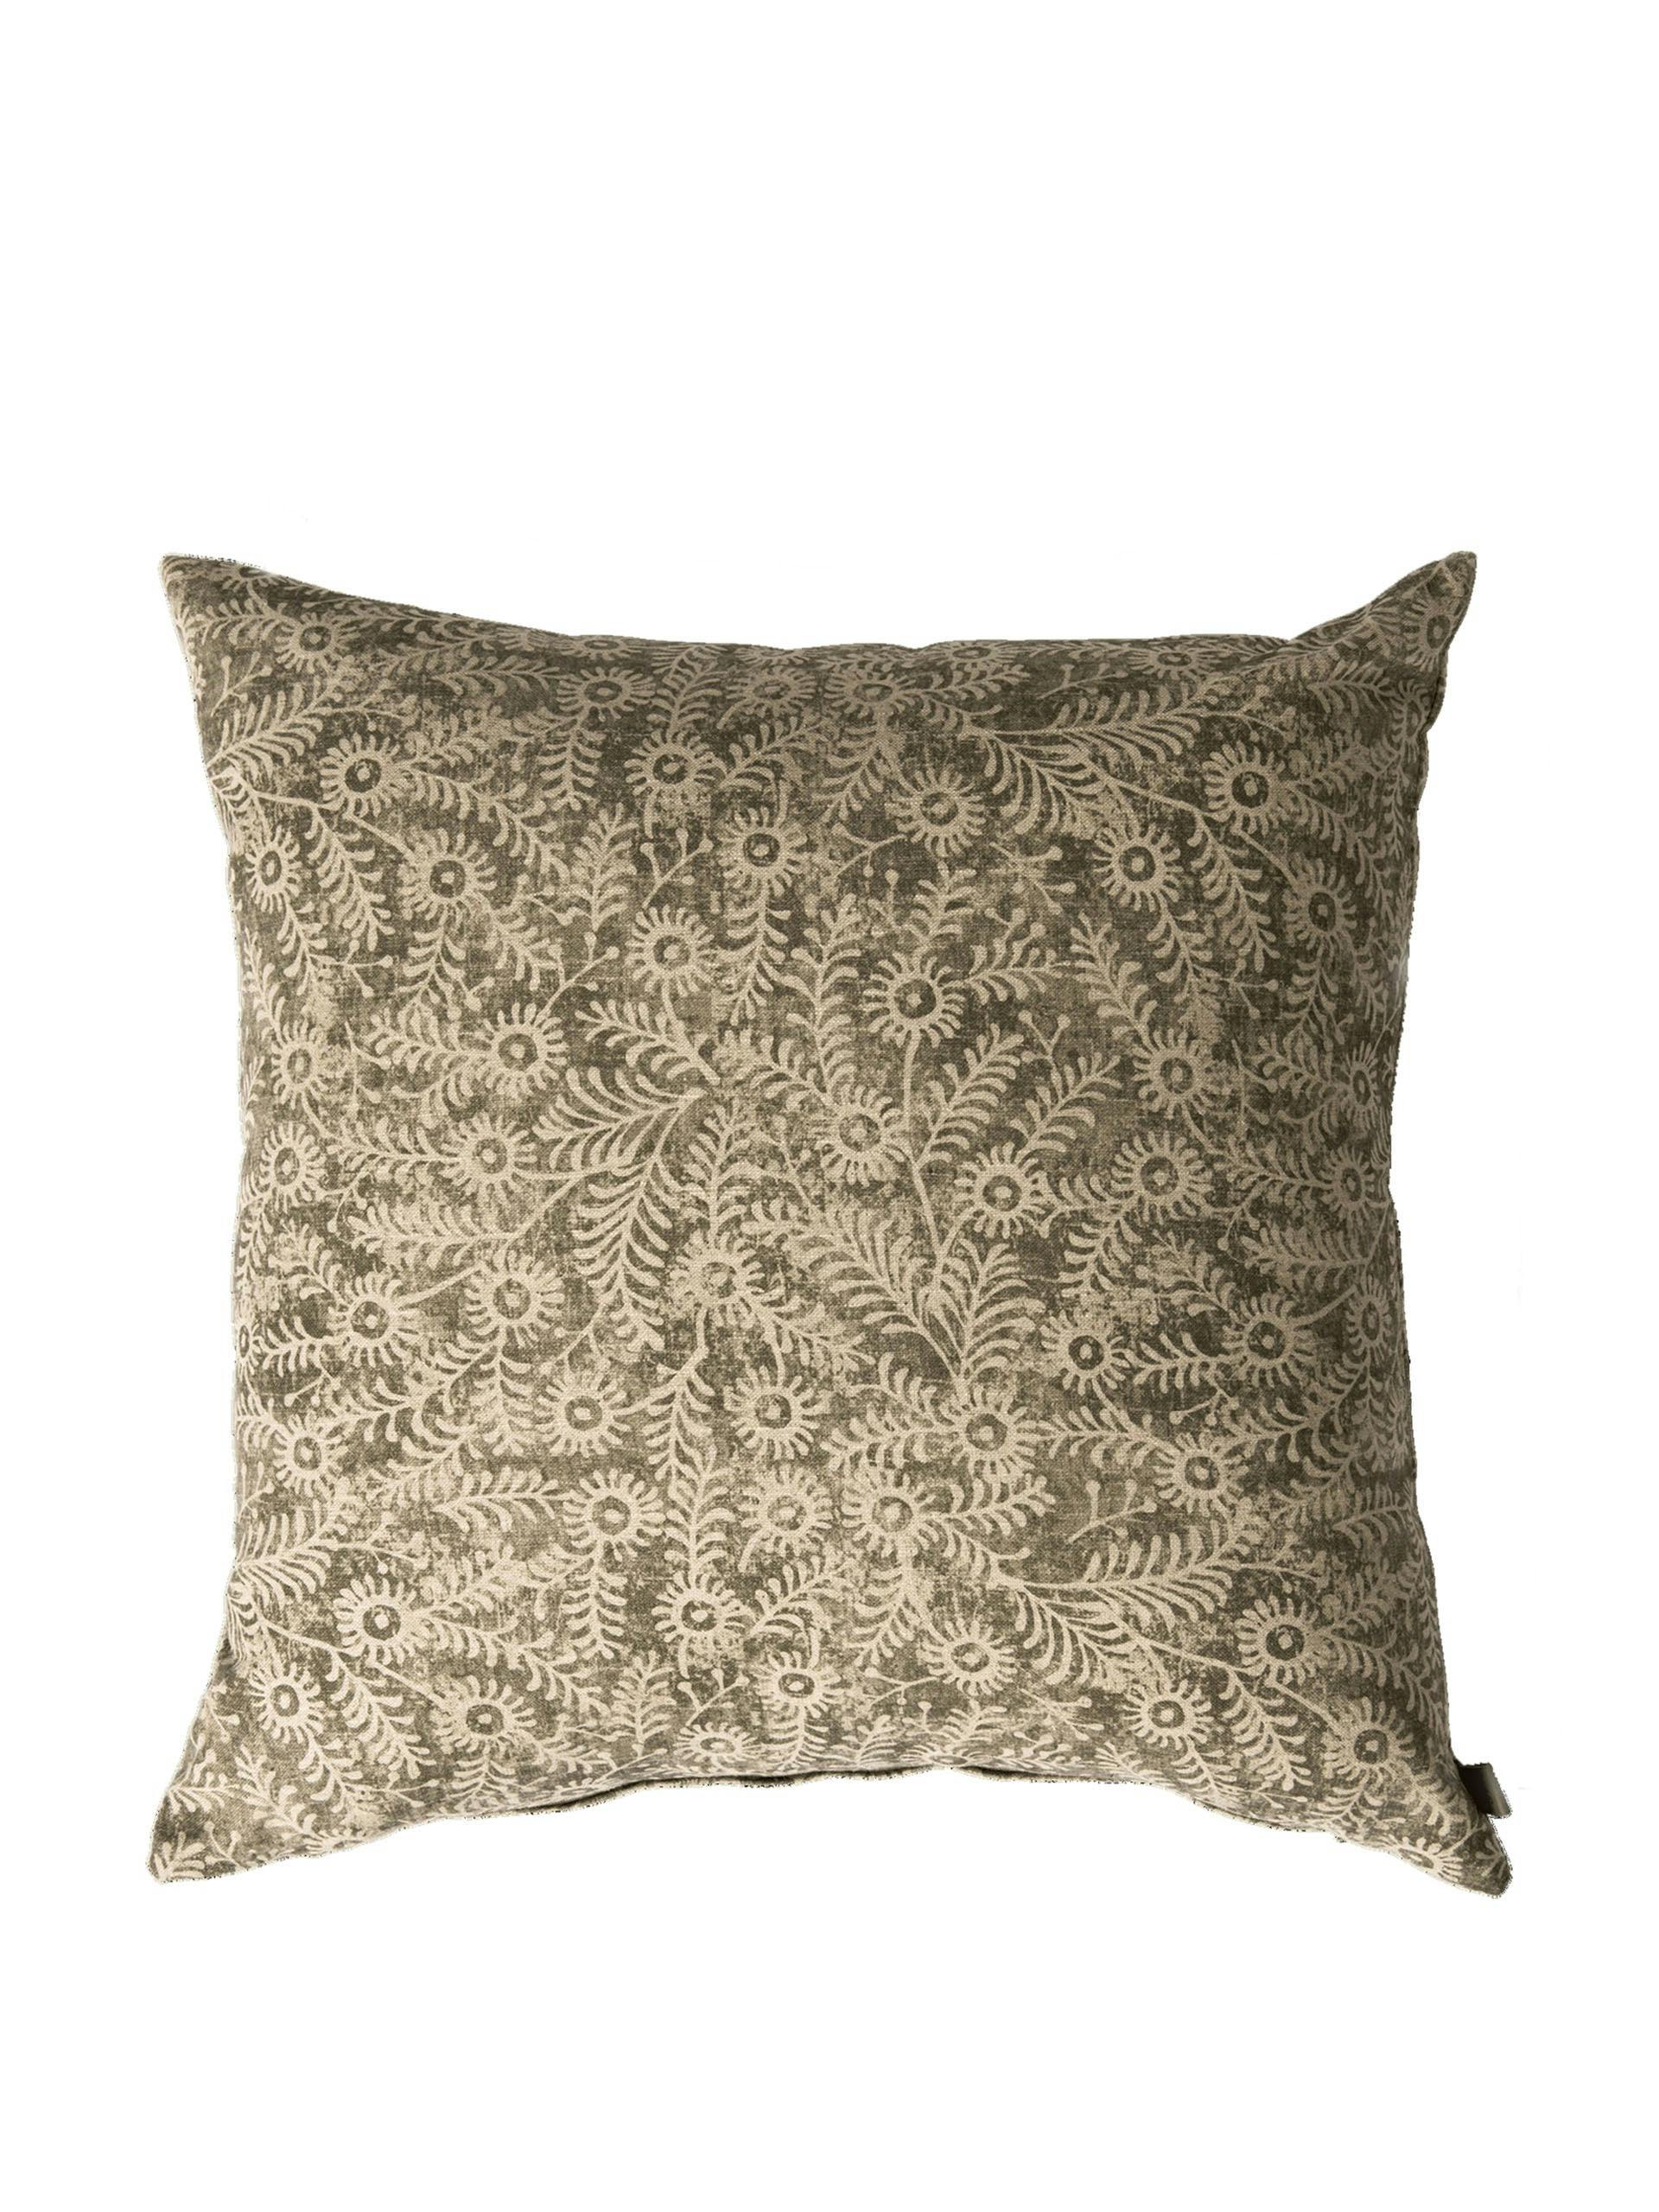 Grace cushion in Orla linen